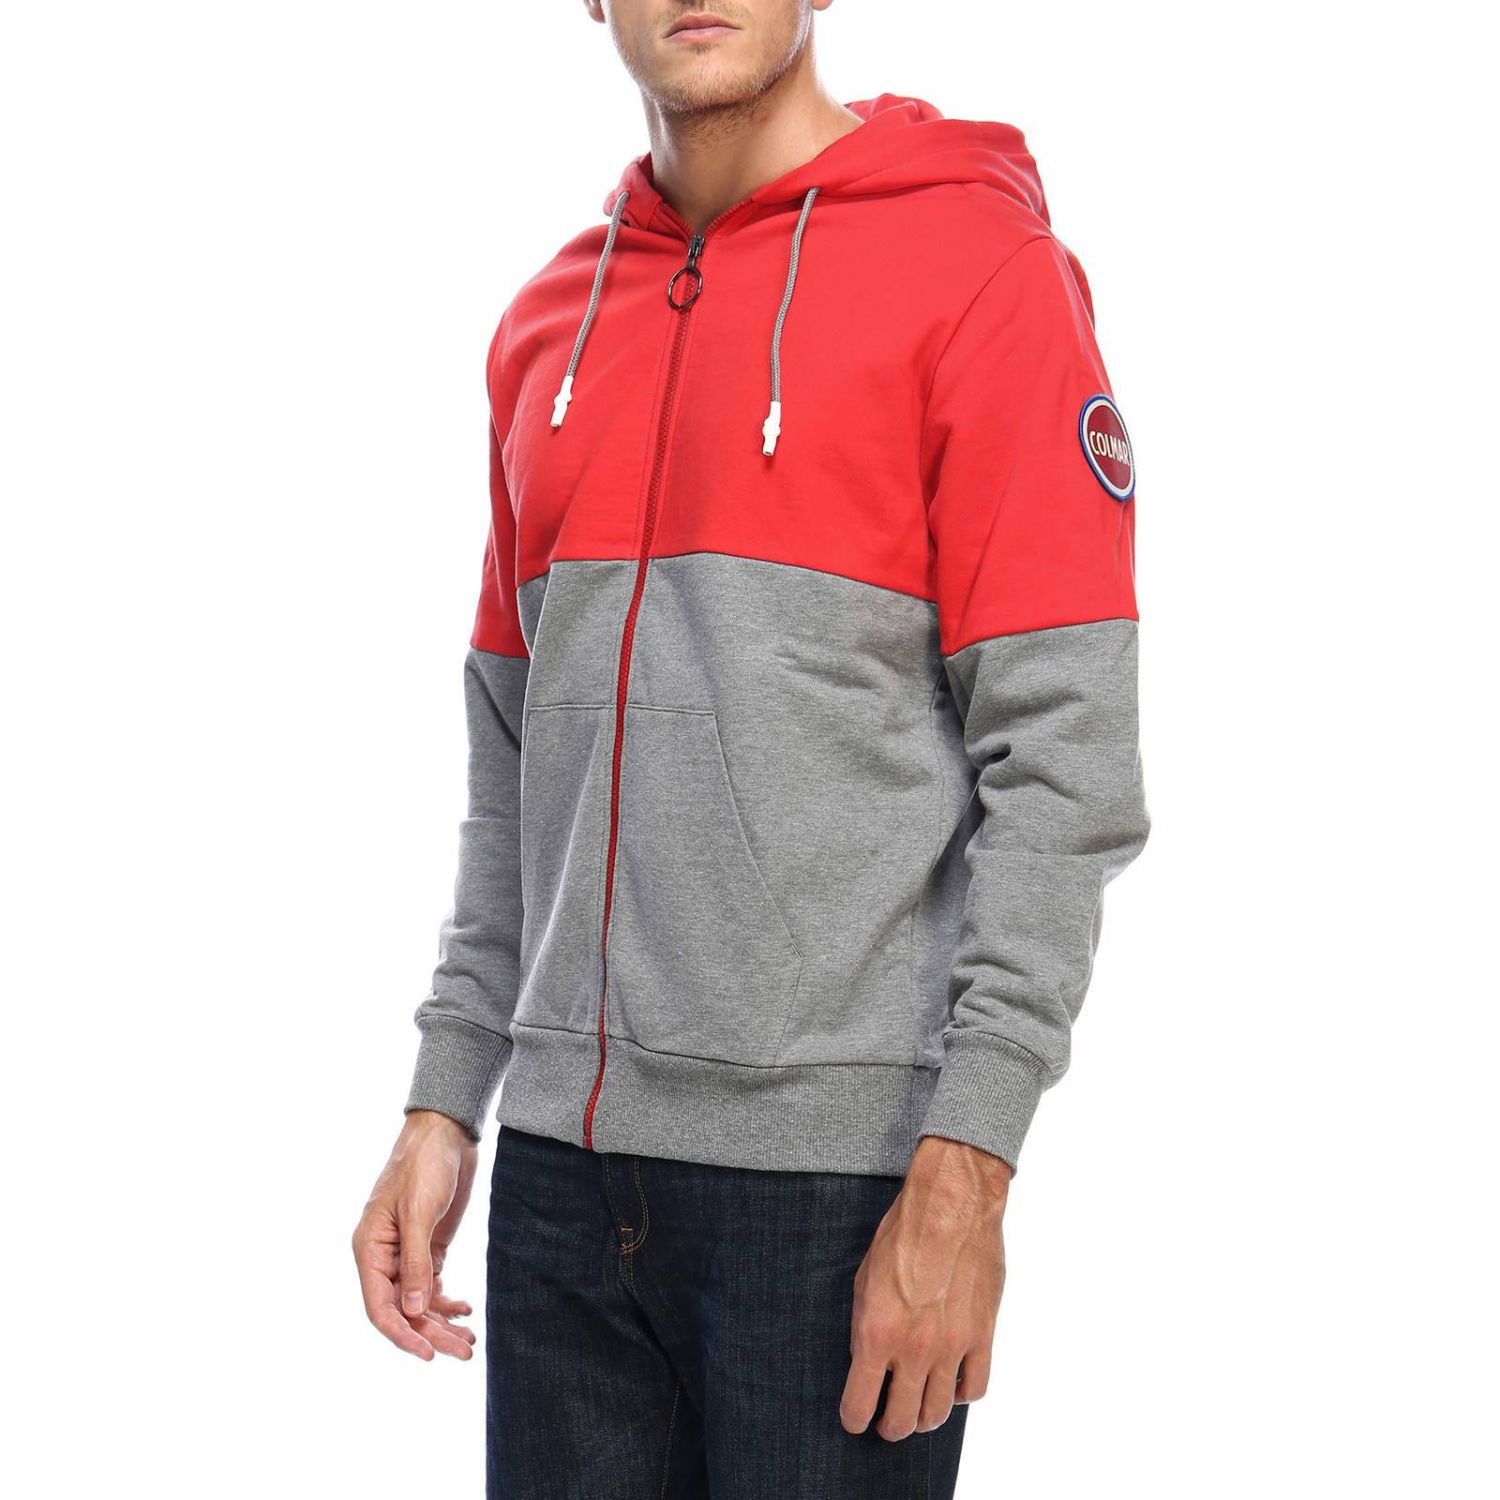 Colmar Outlet: Sweater men - Red | Sweatshirt Colmar 9700 4SR GIGLIO.COM